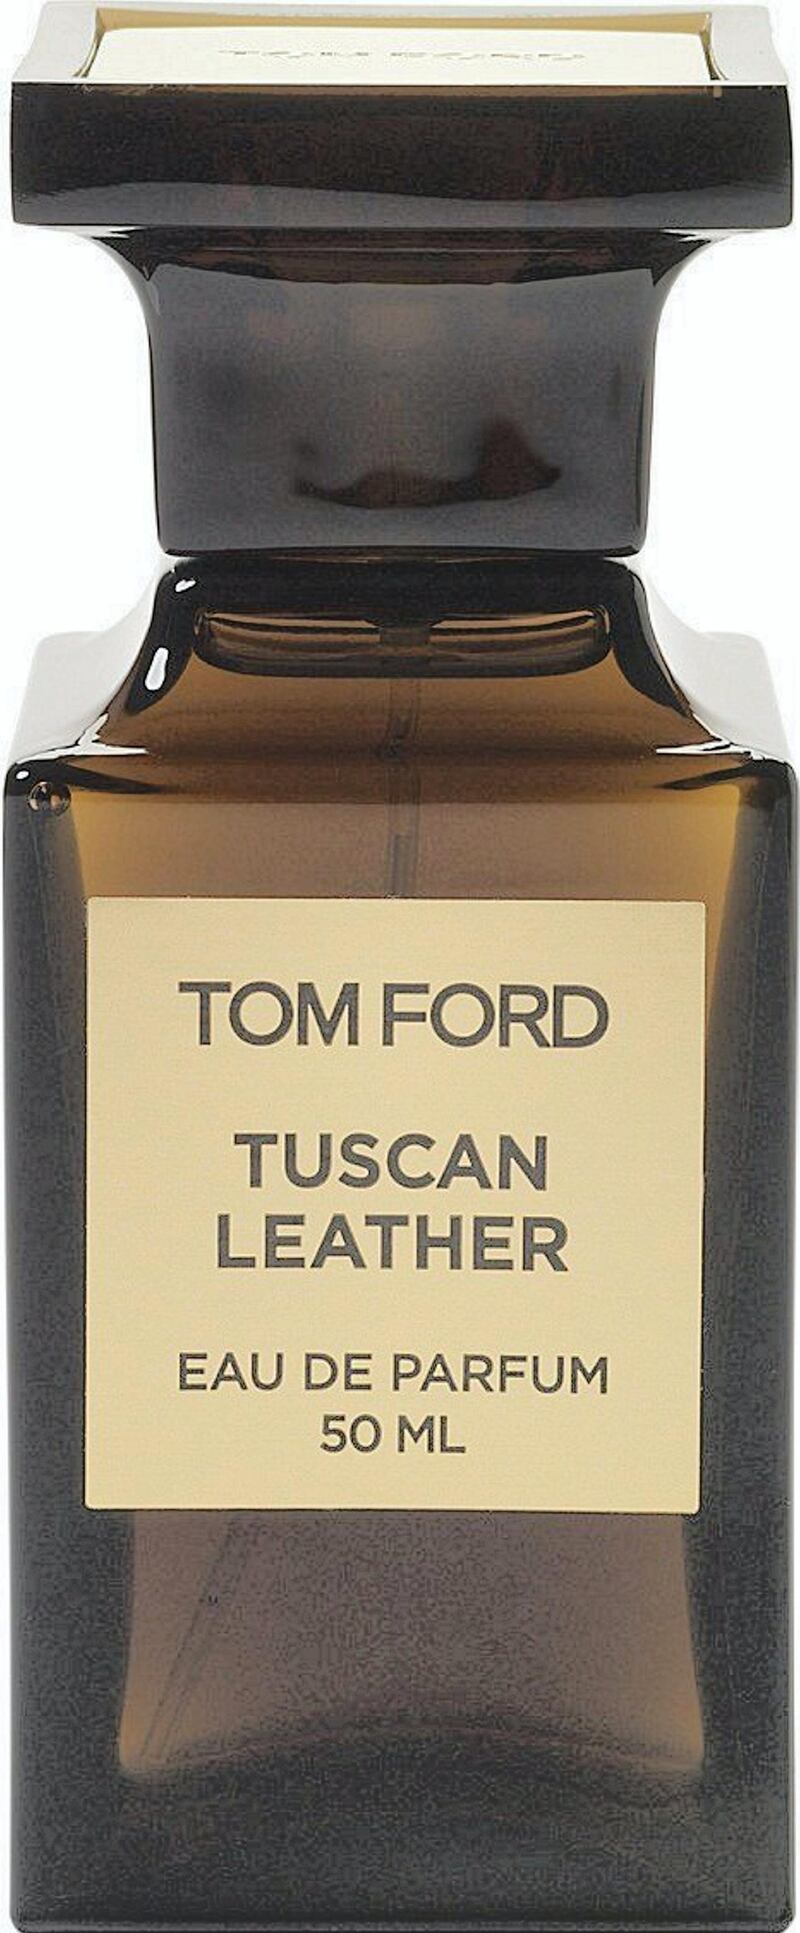 Tuscan Leather by Tom Ford, unisex eau de parfum, 50ml, Dh518.14, amazon.ae